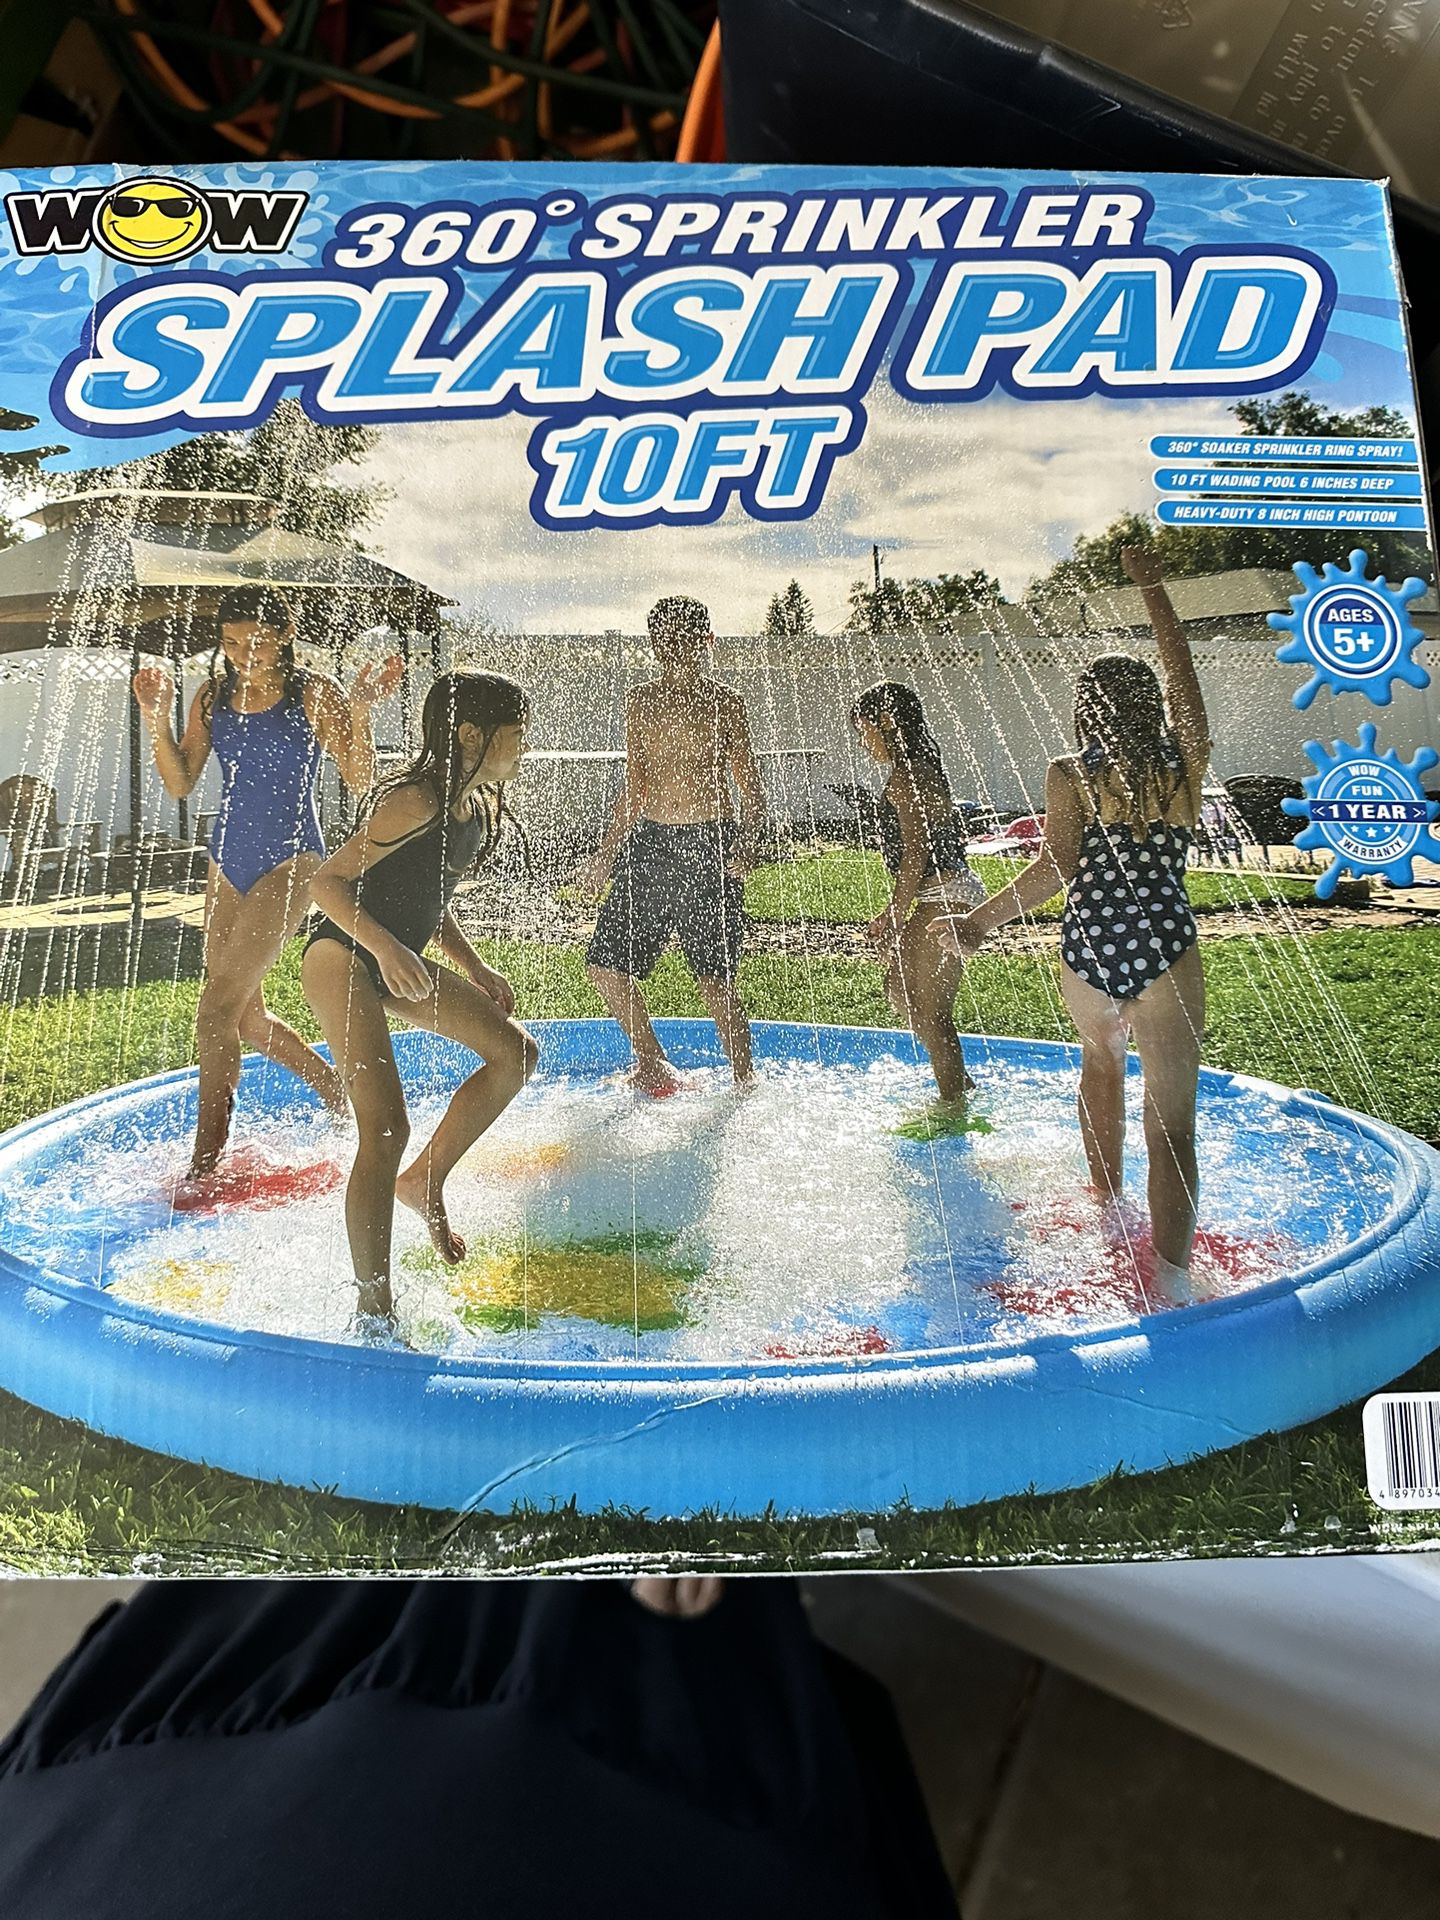 Wow, 360 Sprinkler Splash Pad 10 Feet